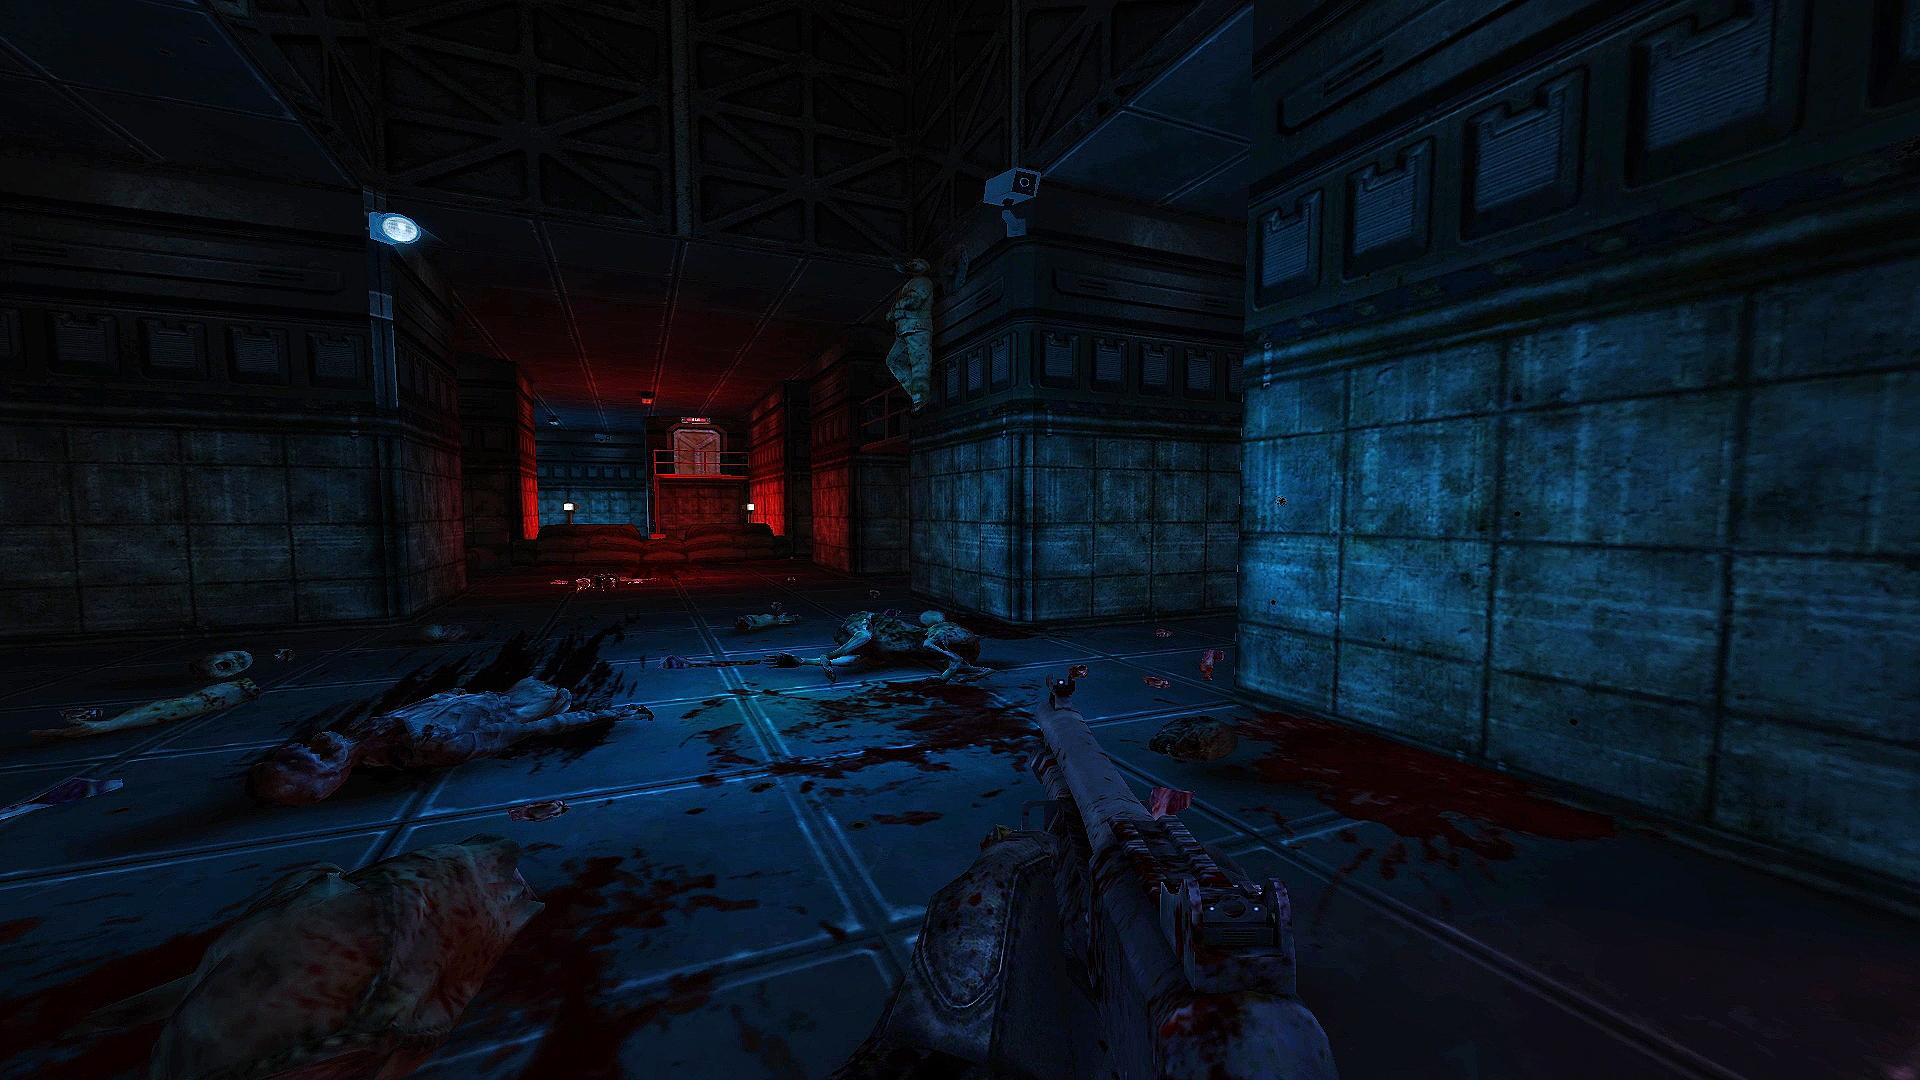 Screenshot №1 from game CRIMSON METAL Classic 1999